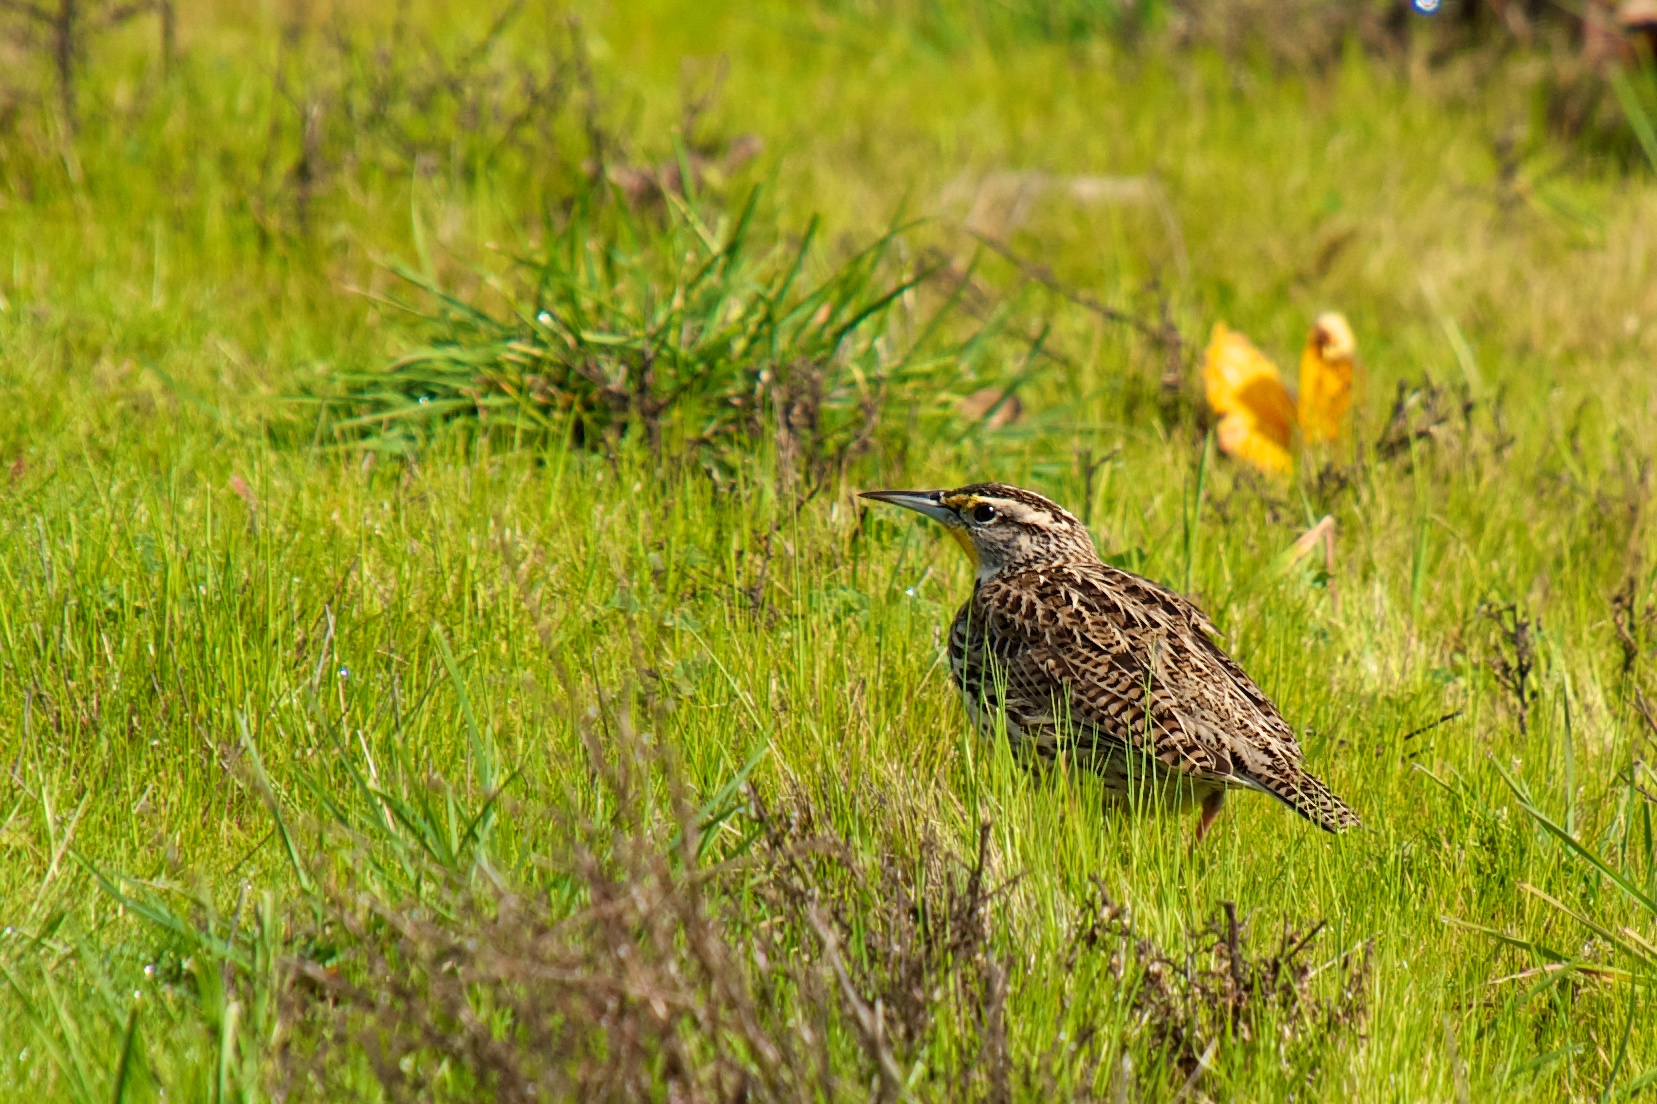 a bird sits in the tall grass near the chicken